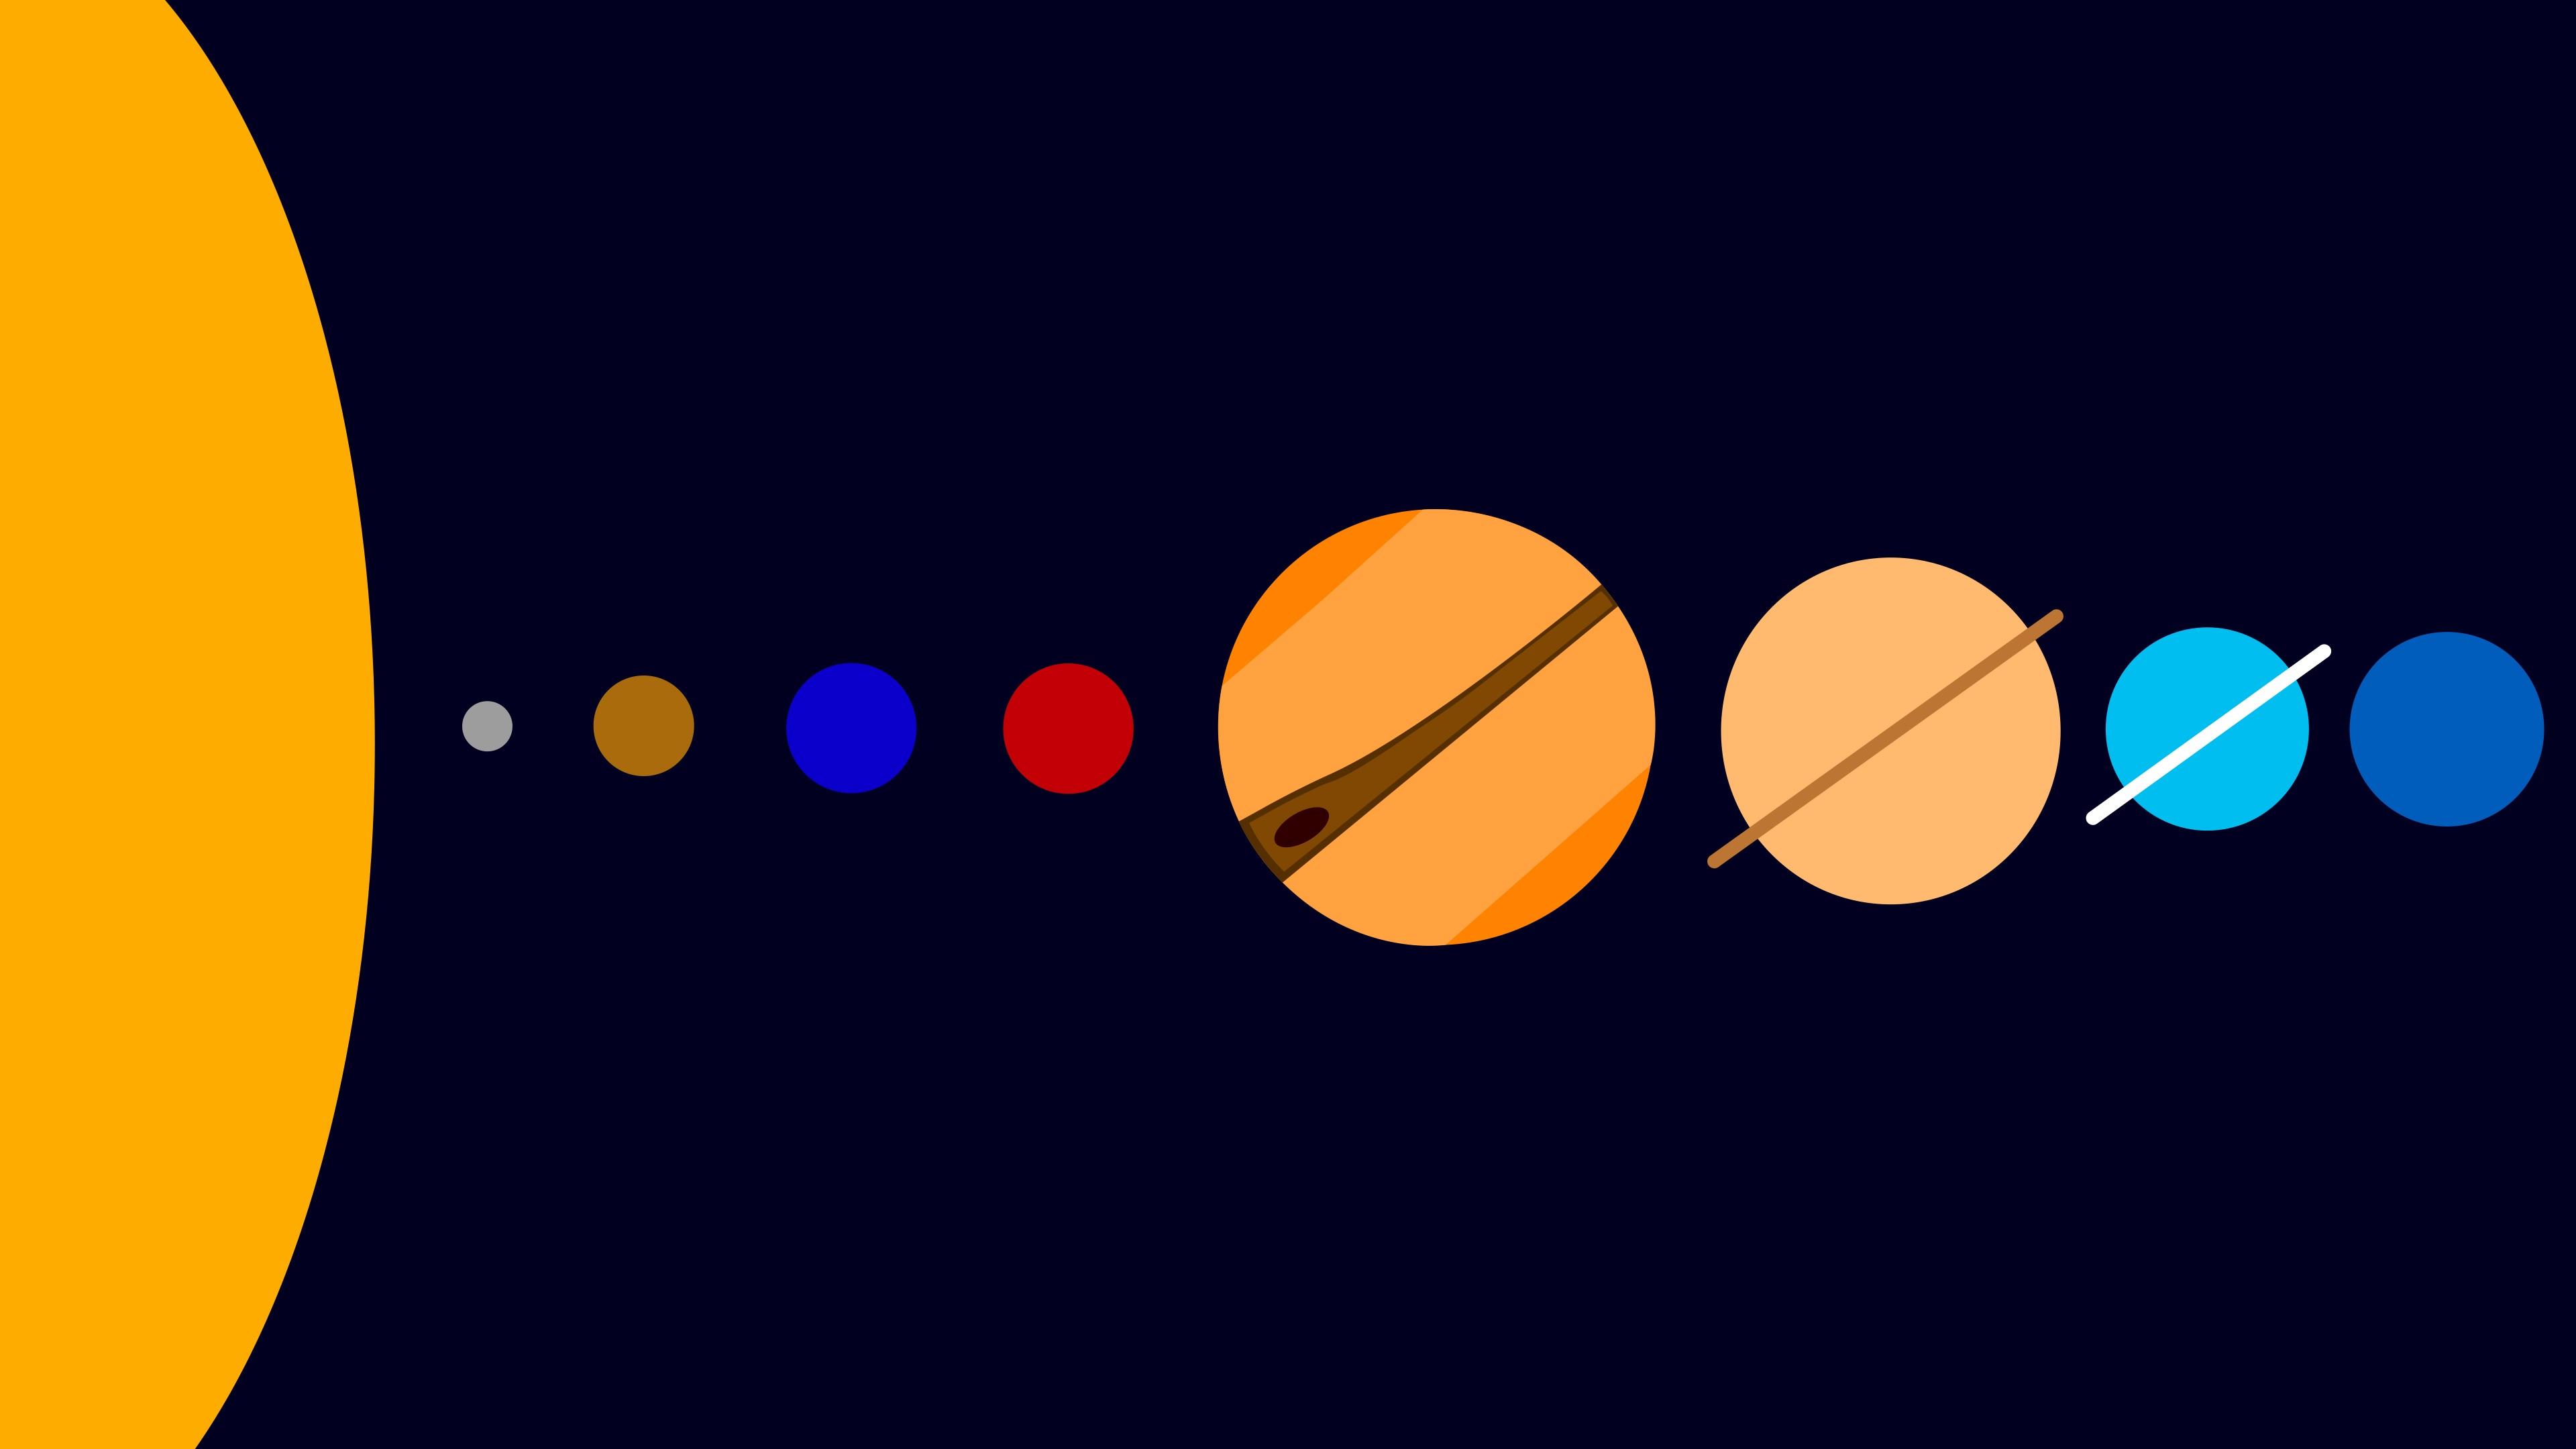 Minimal Solar System Wallpapers